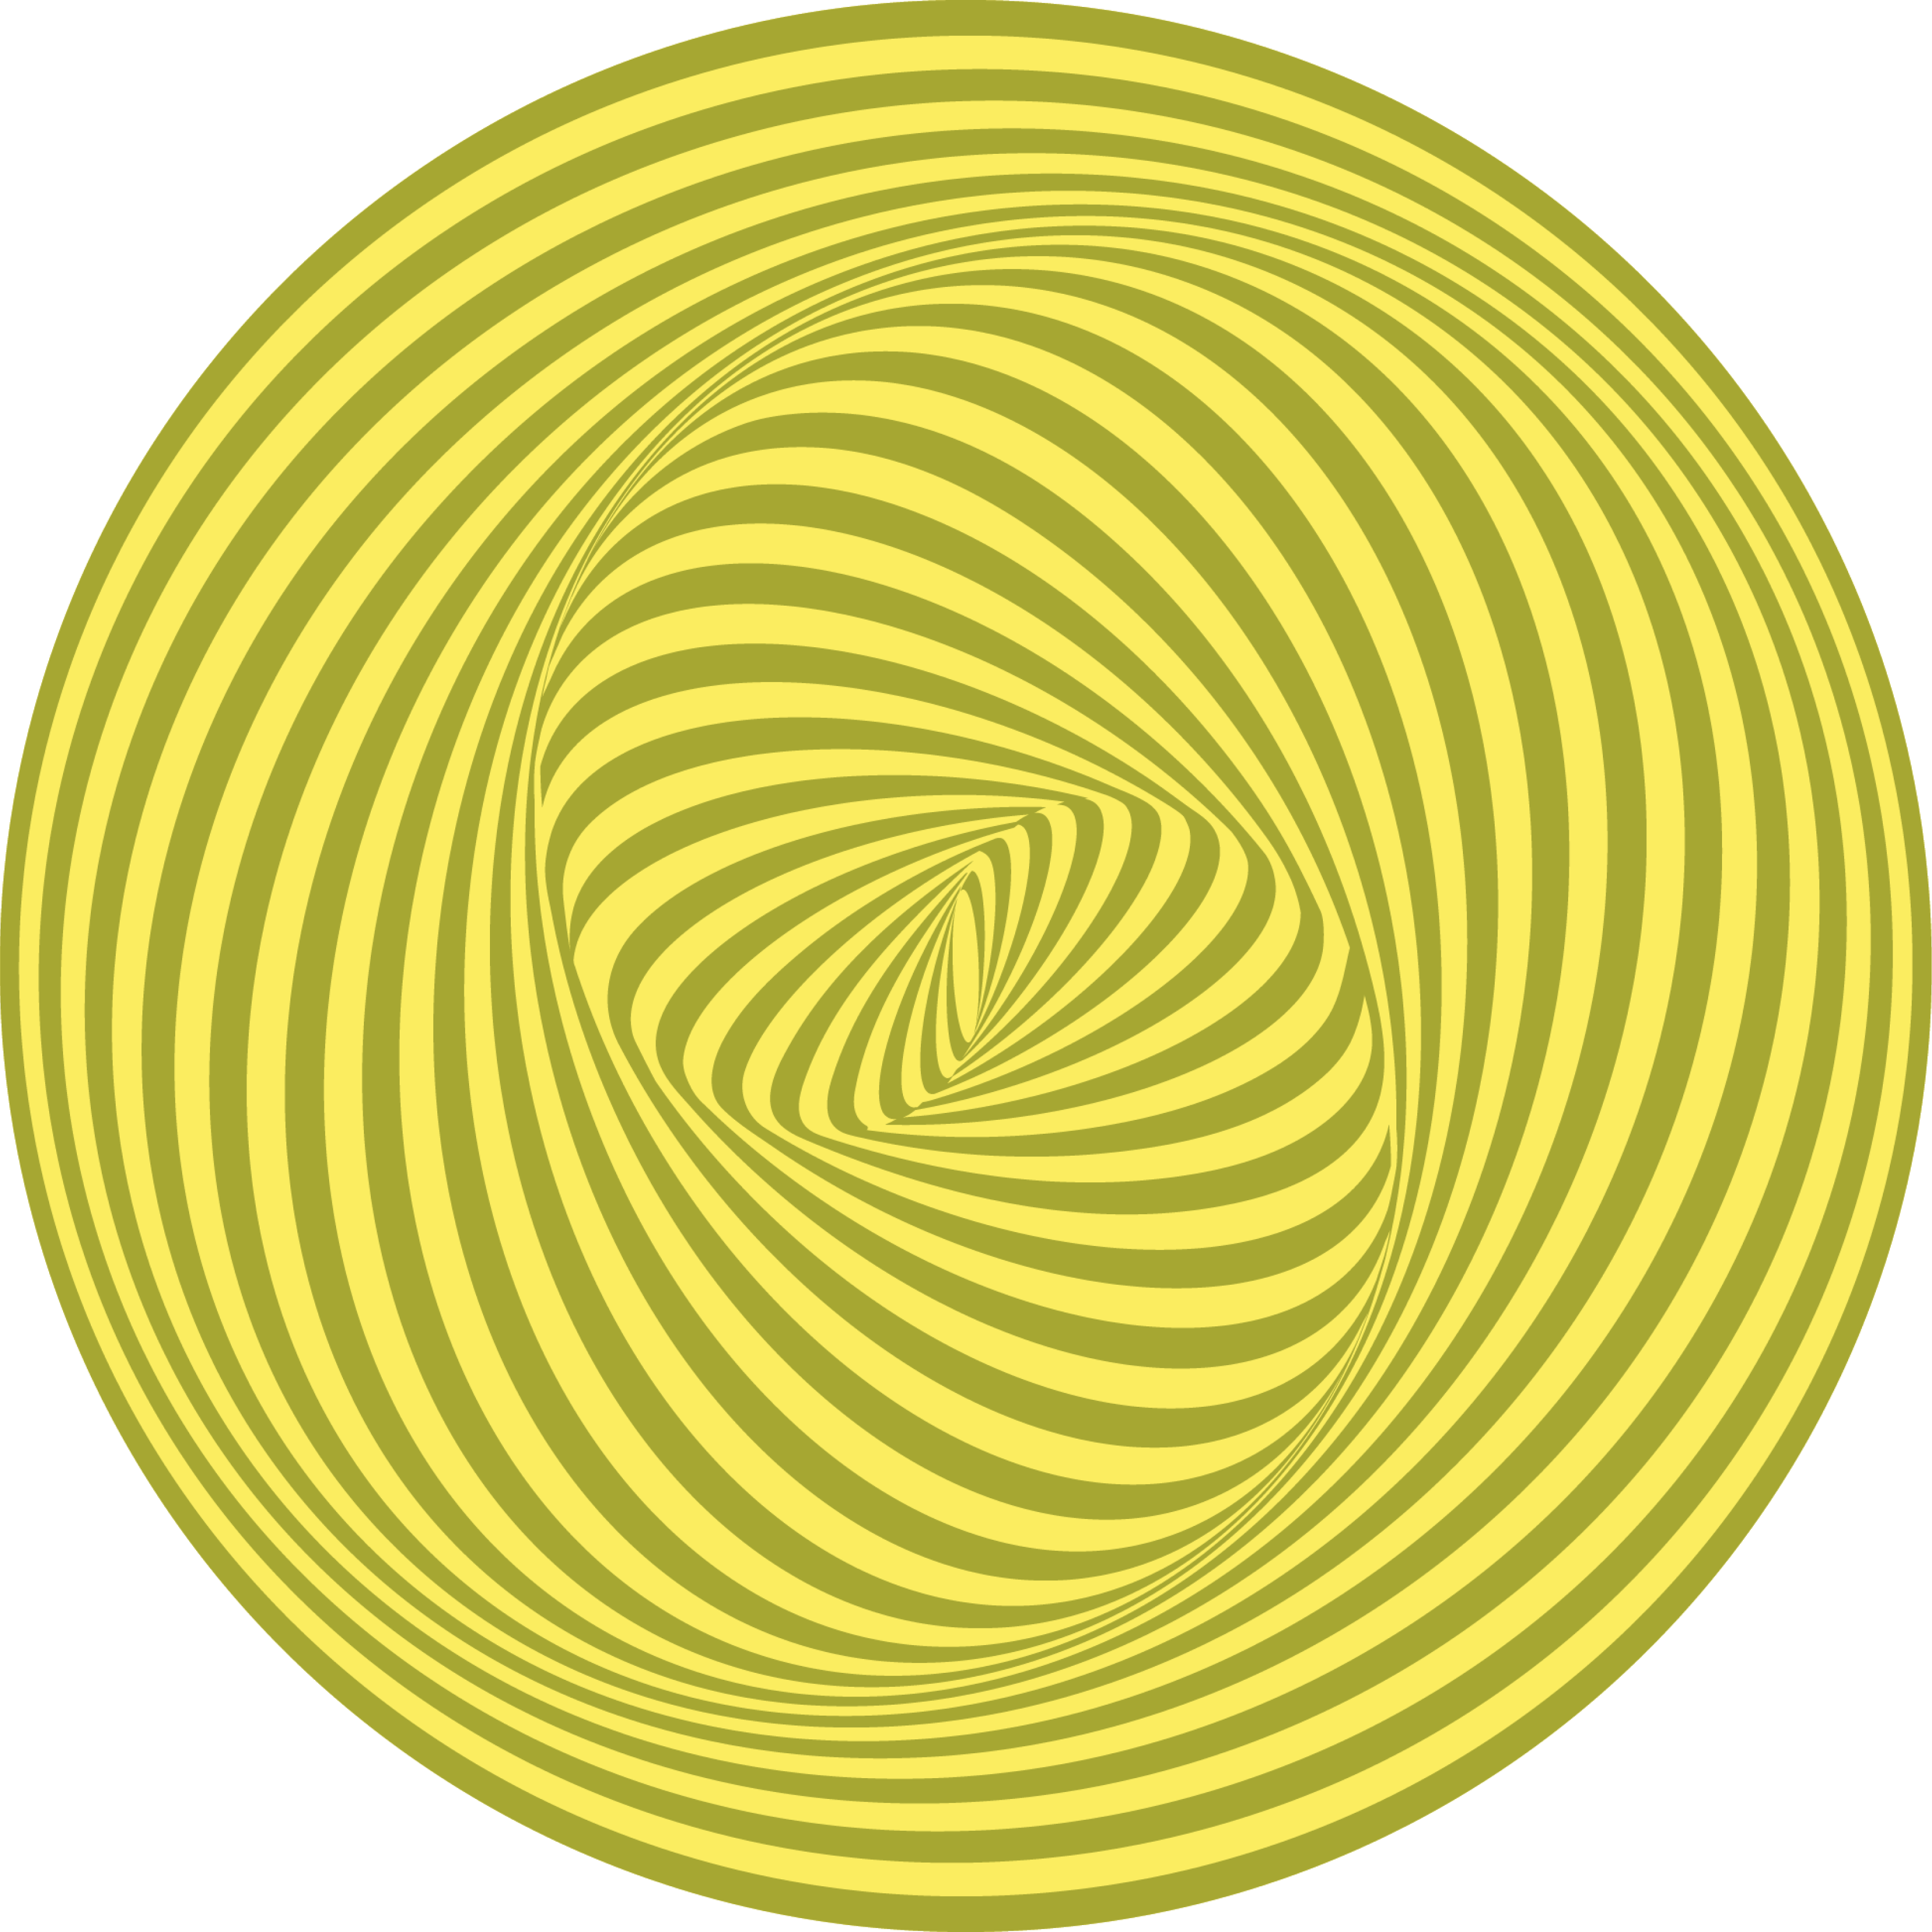 Optical illusion image